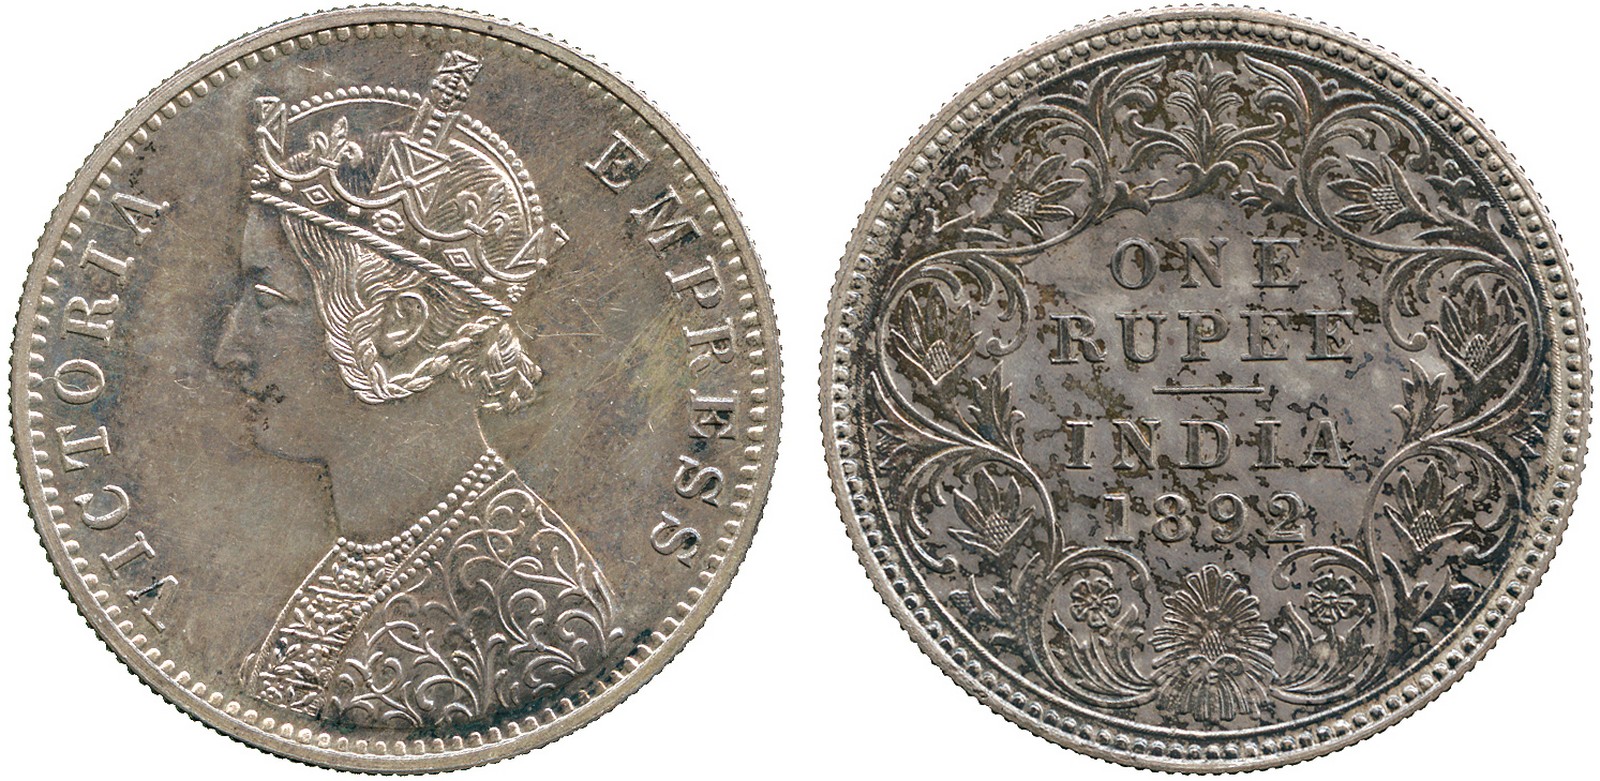 WORLD COINS, India, British India, Victoria, Restrike Silver Proof Rupee, 1892C, C3/I, 11.68g (SW